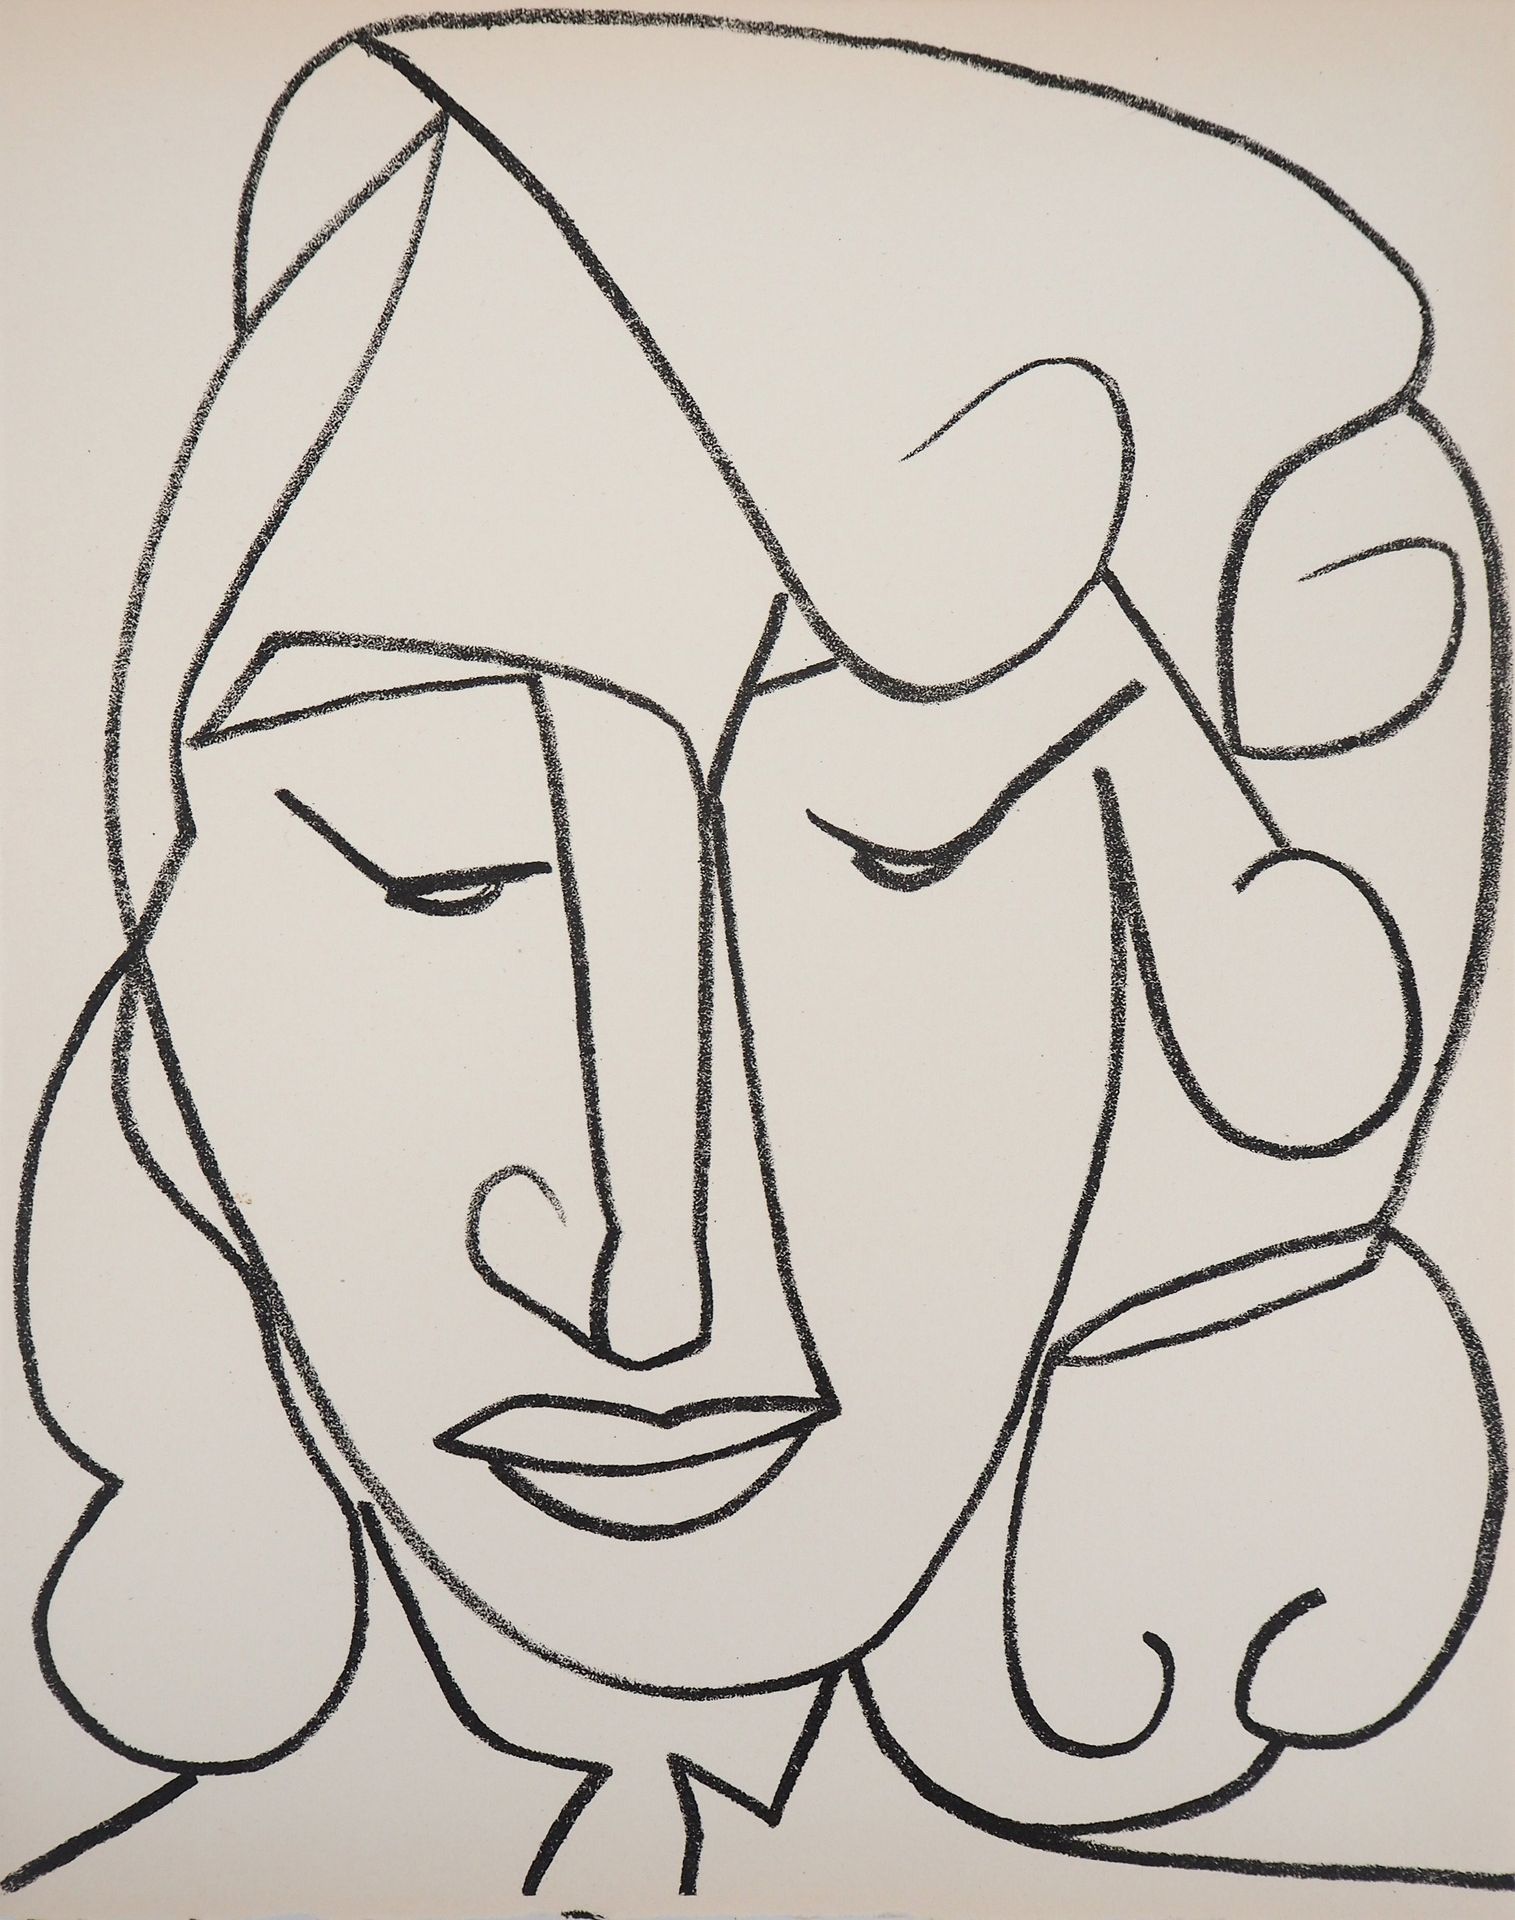 FRANÇOISE GILOT 弗朗索瓦丝-吉洛特 (1921)

一个女人的肖像，1951年

原始石版画

马莱梭织纸上 28 x 22.5 cm

印刷了&hellip;